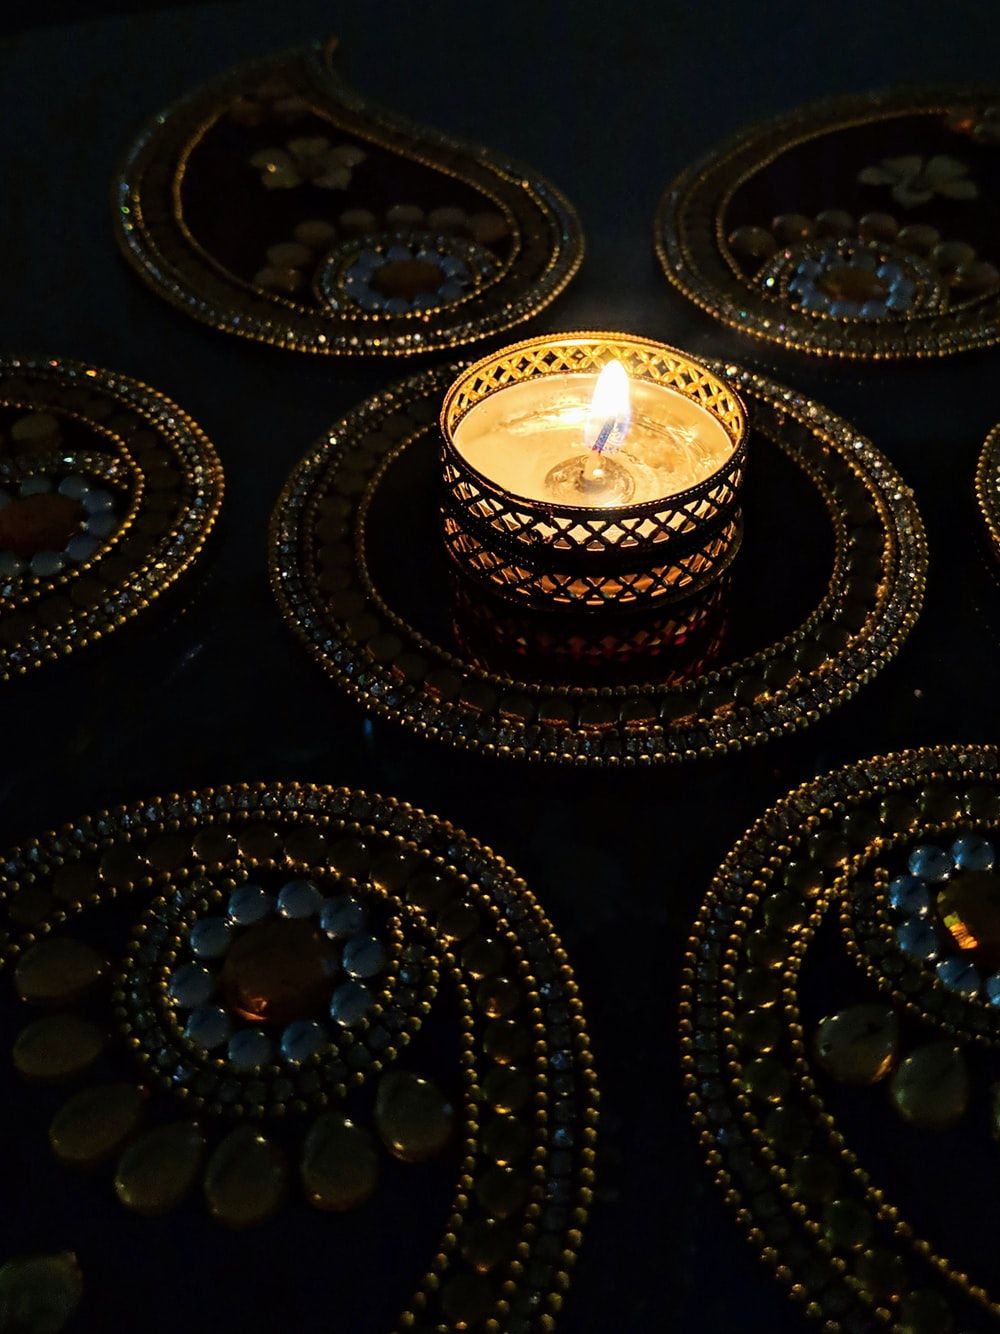 Diwali Lights Picture. Download Free Image